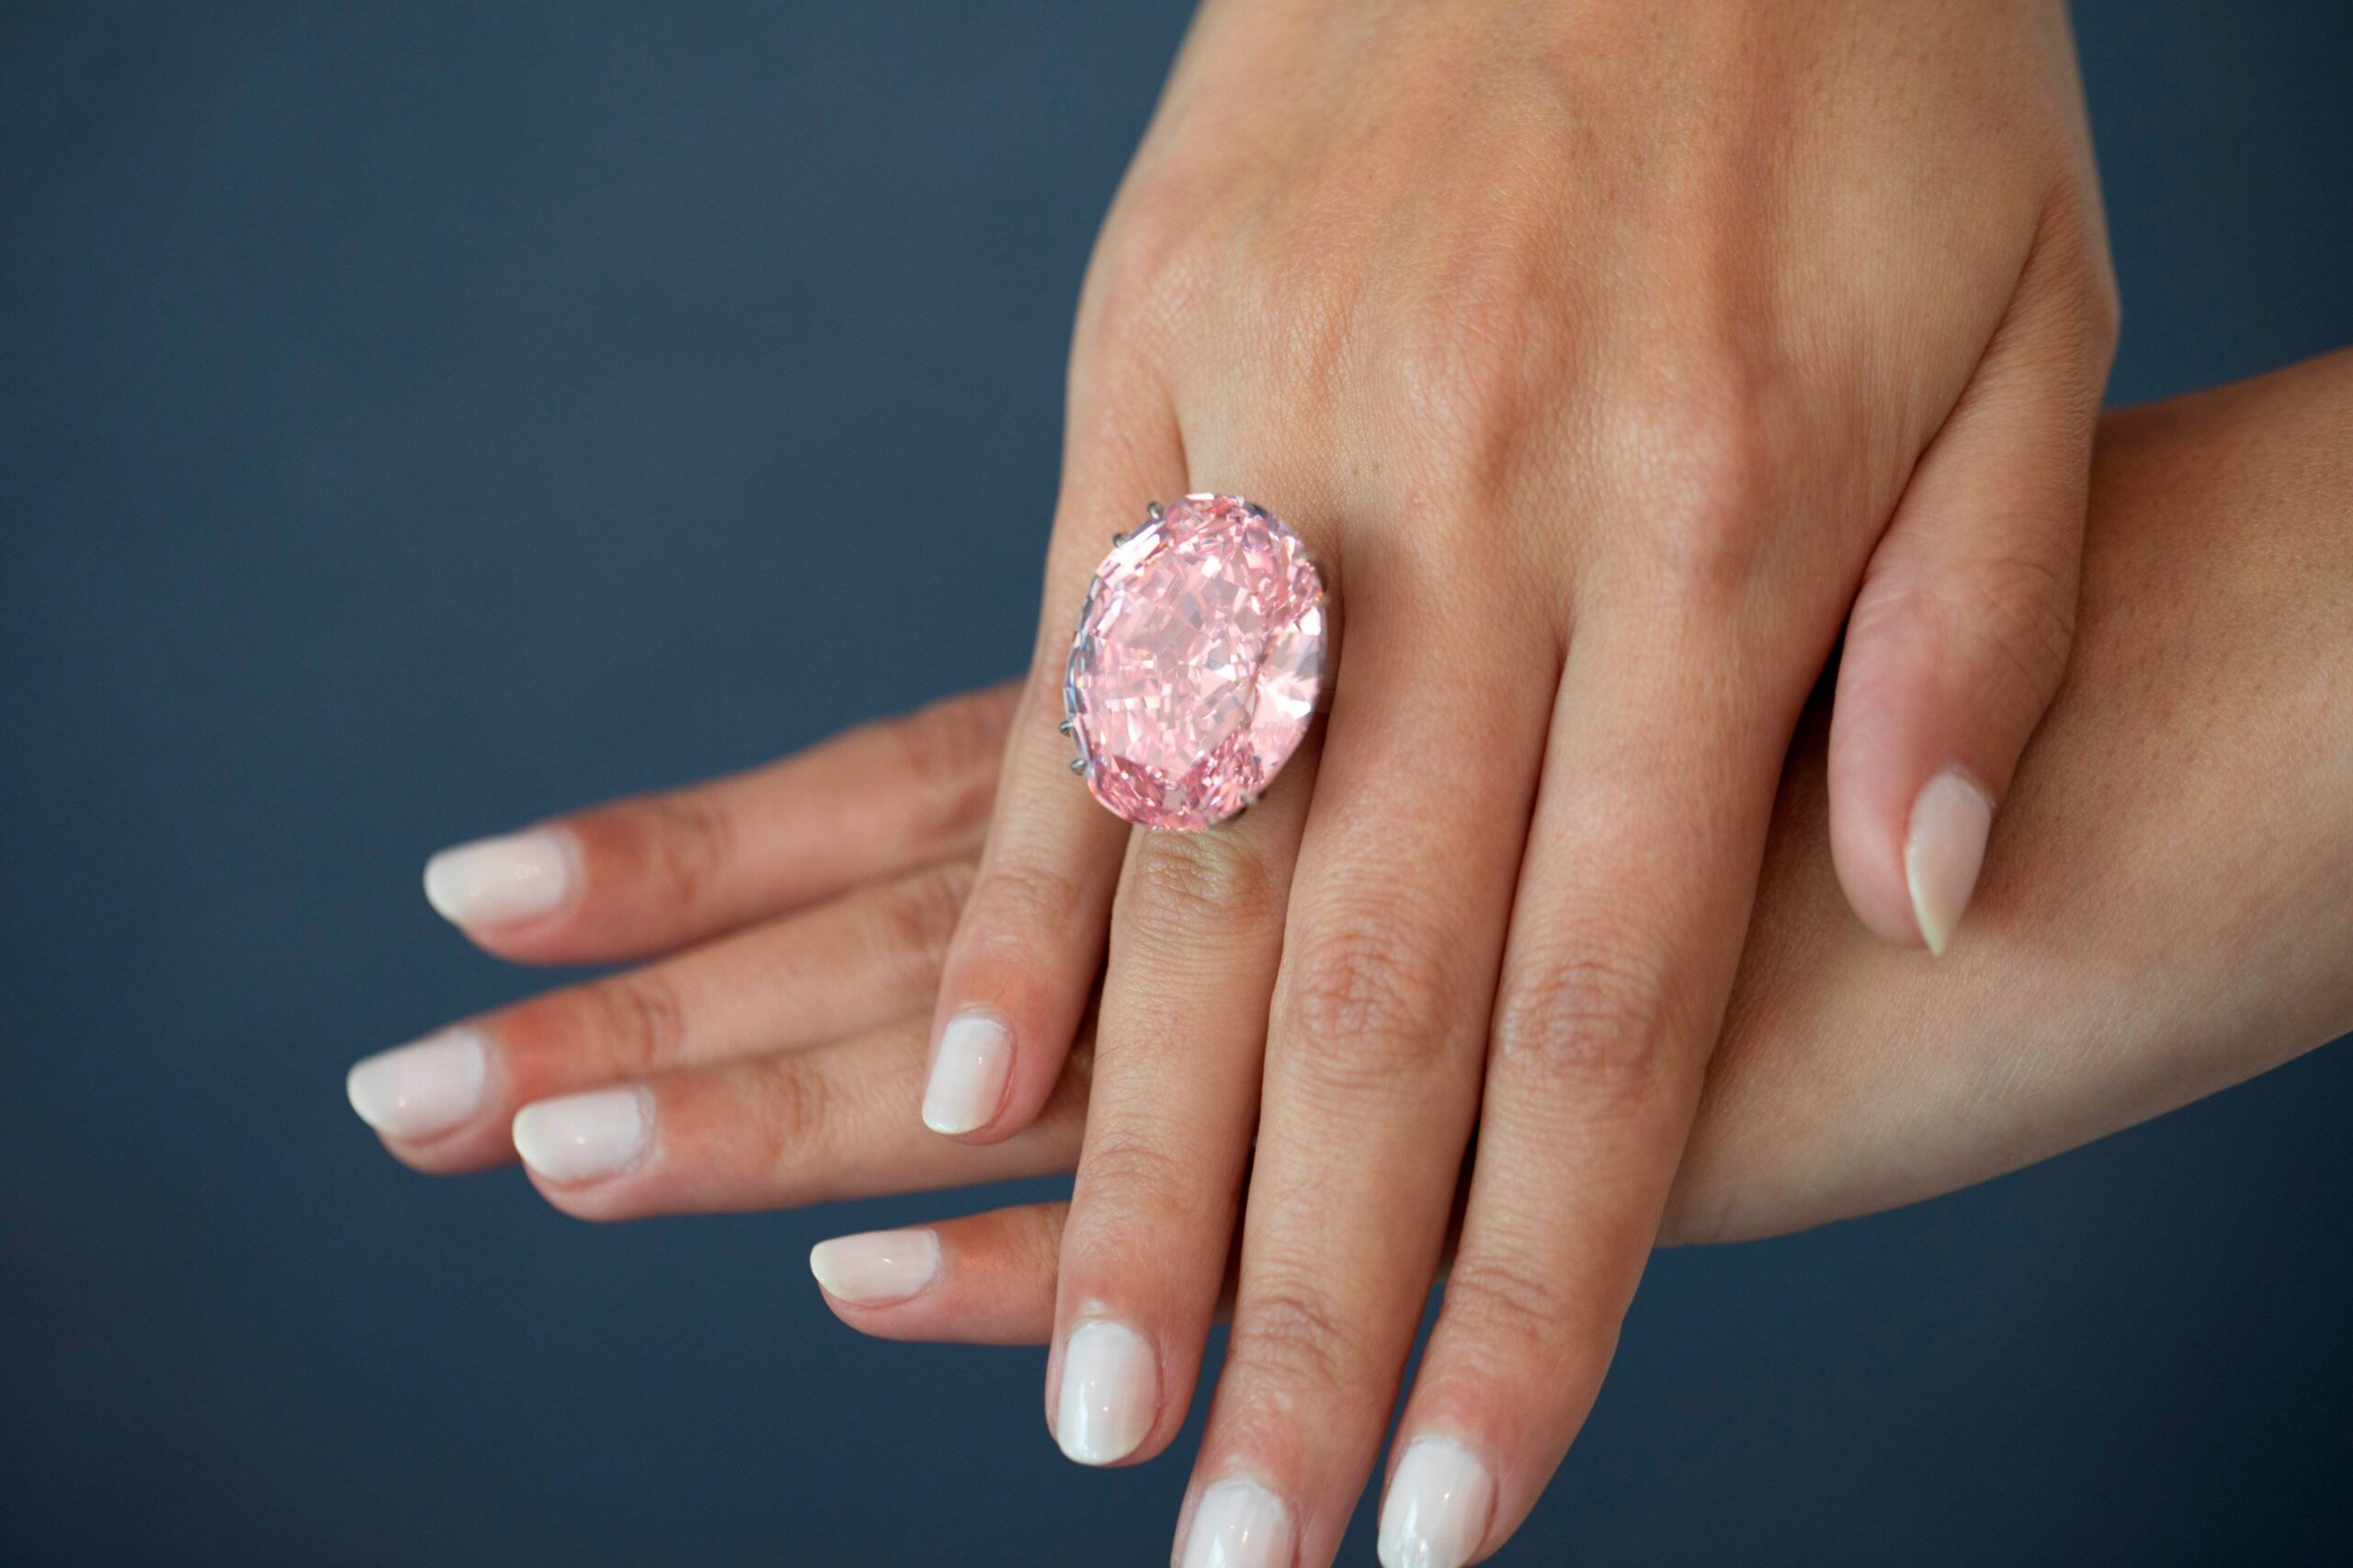 Pink Star 59.60 carat pink diamond